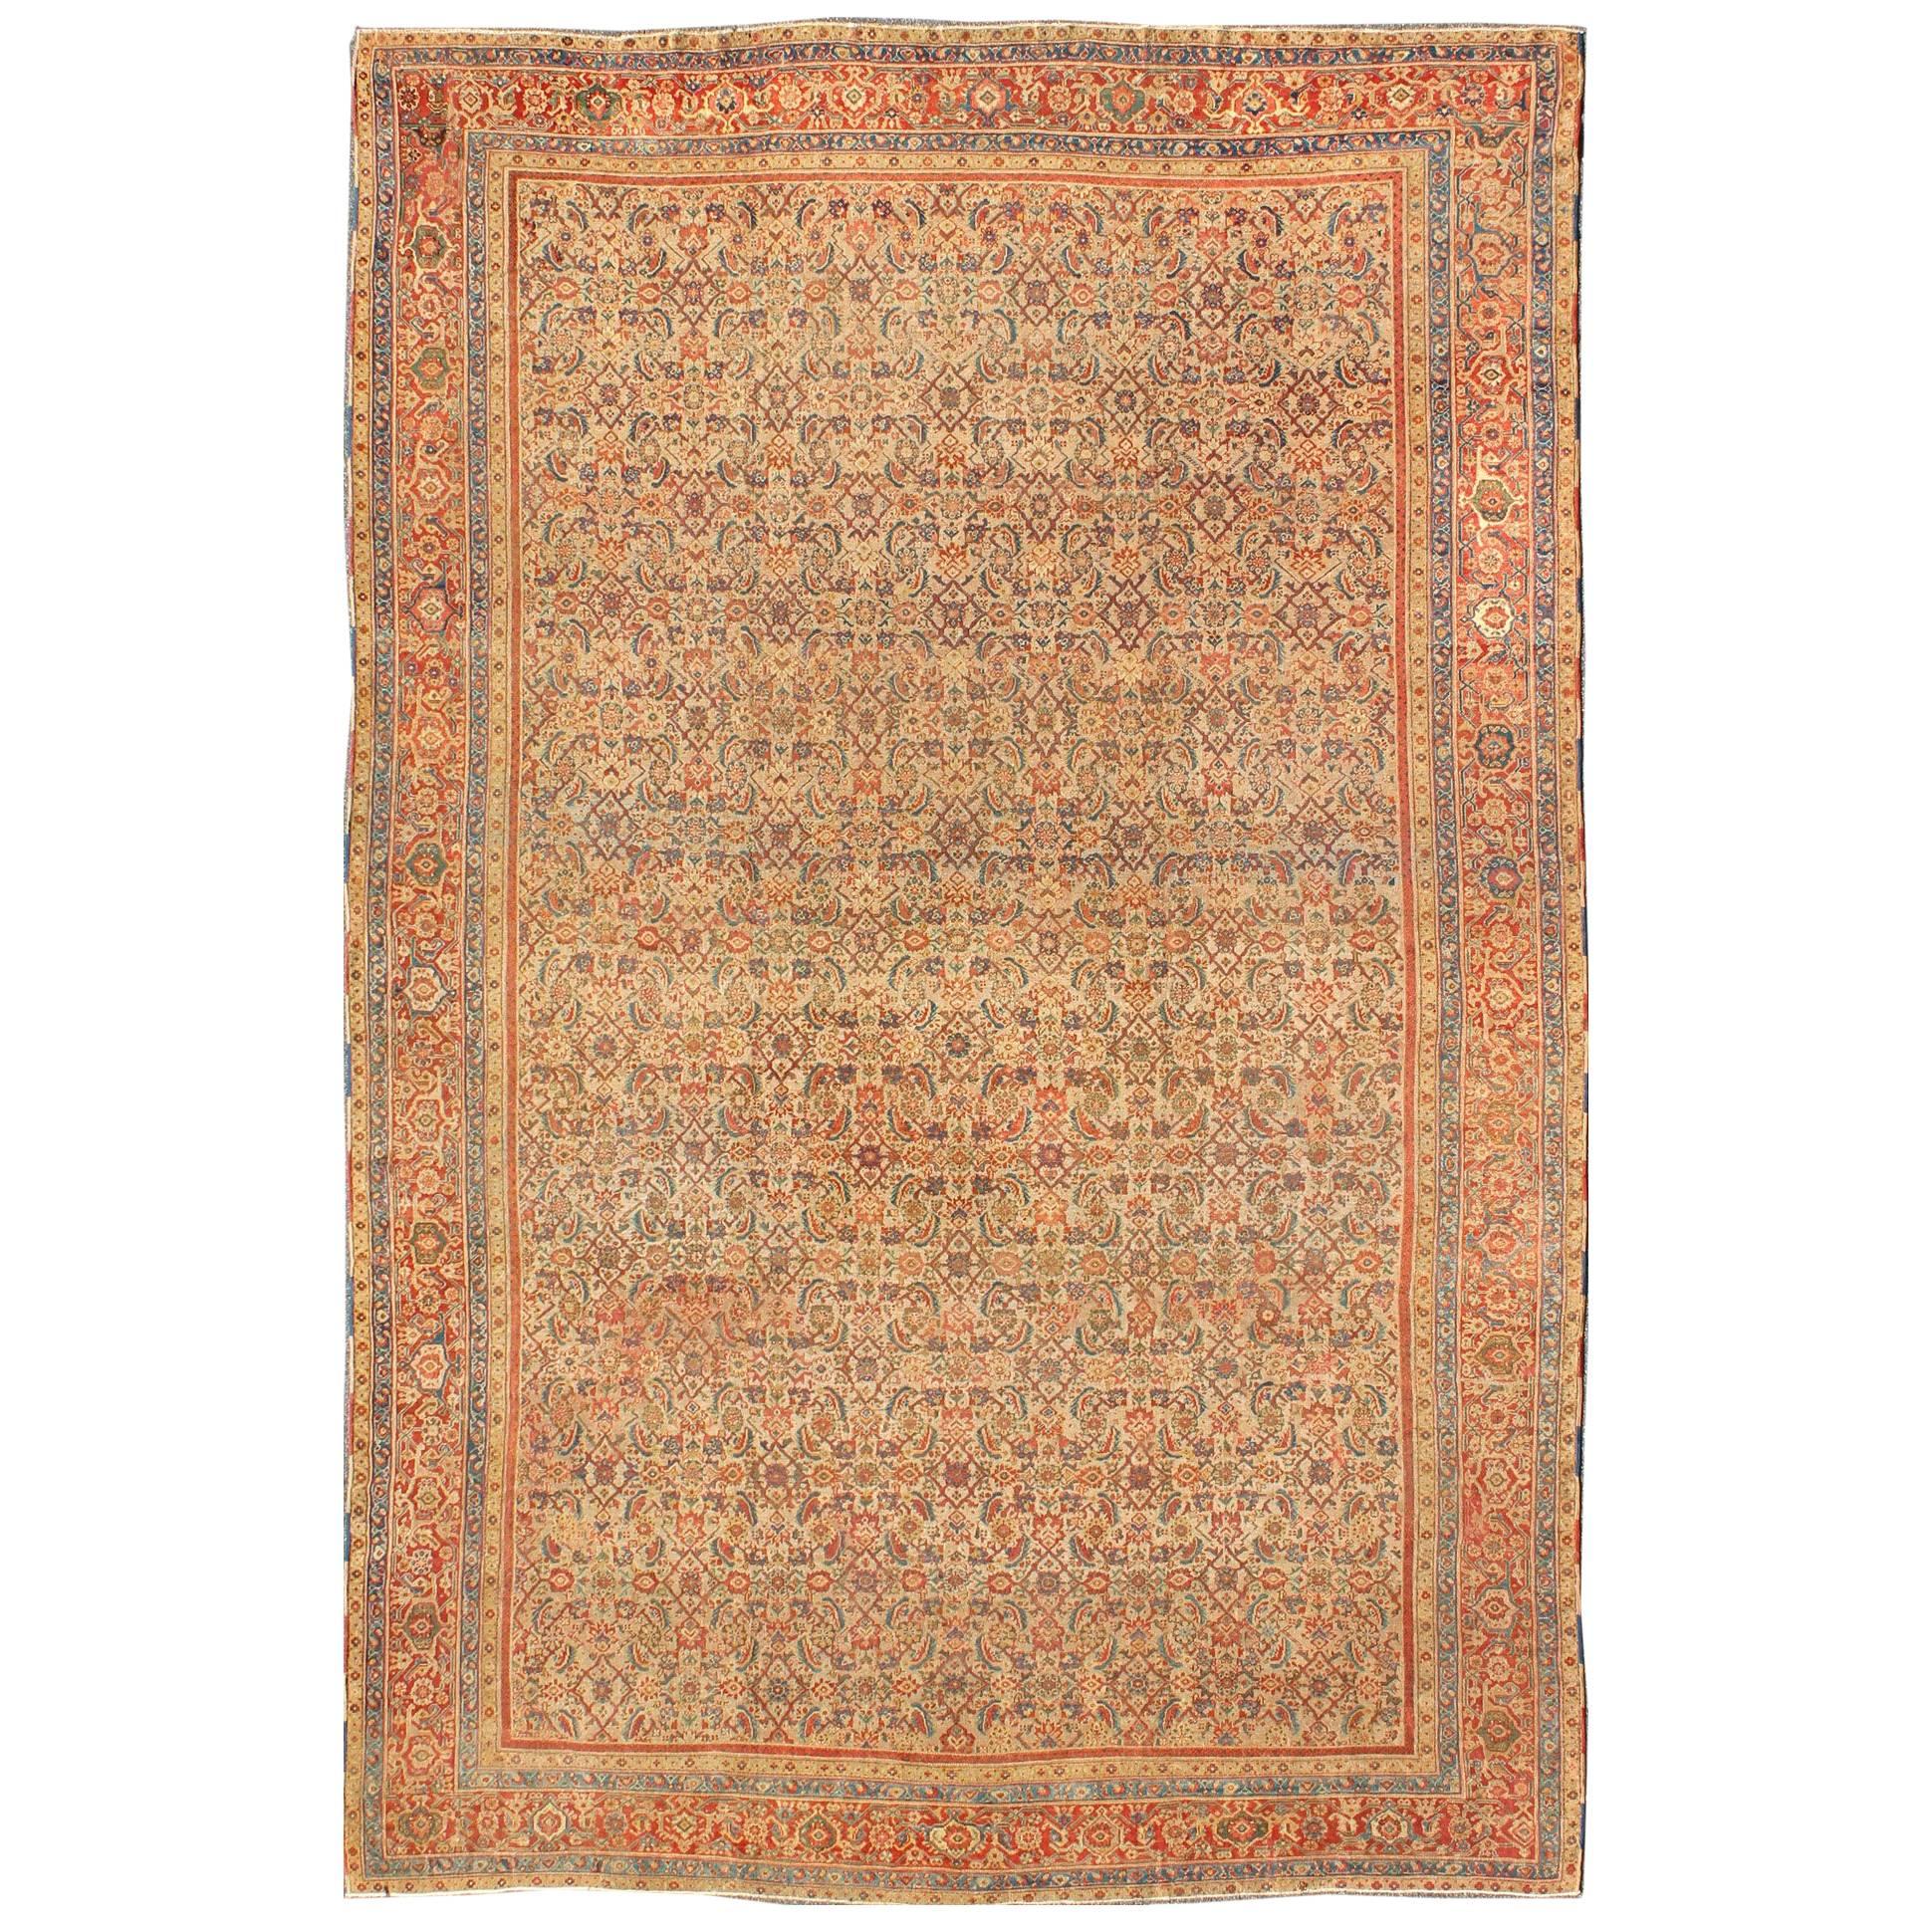 Grandiose tapis persan ancien Sultanabad à fond brun clair, rouge rouille, vert